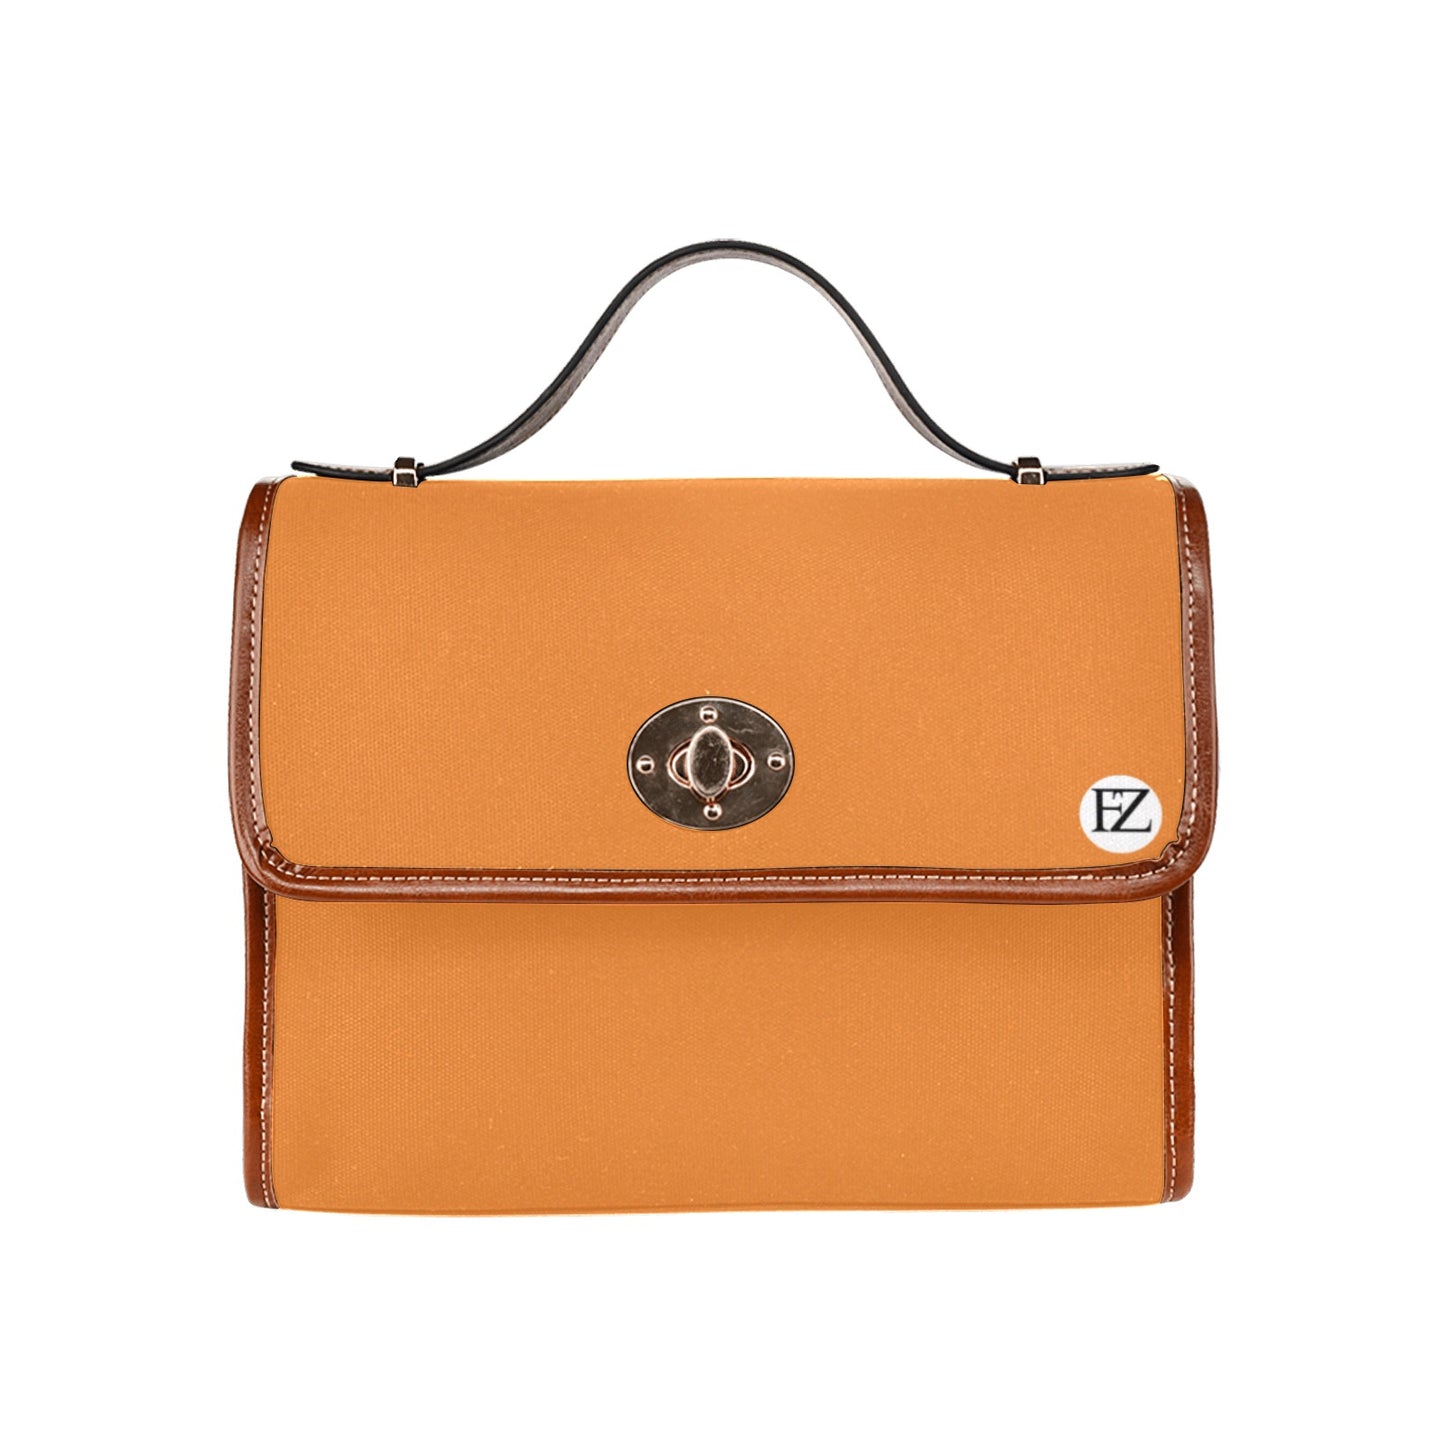 fz original handbag one size / fz - orange all over print waterproof canvas bag(model1641)(brown strap)